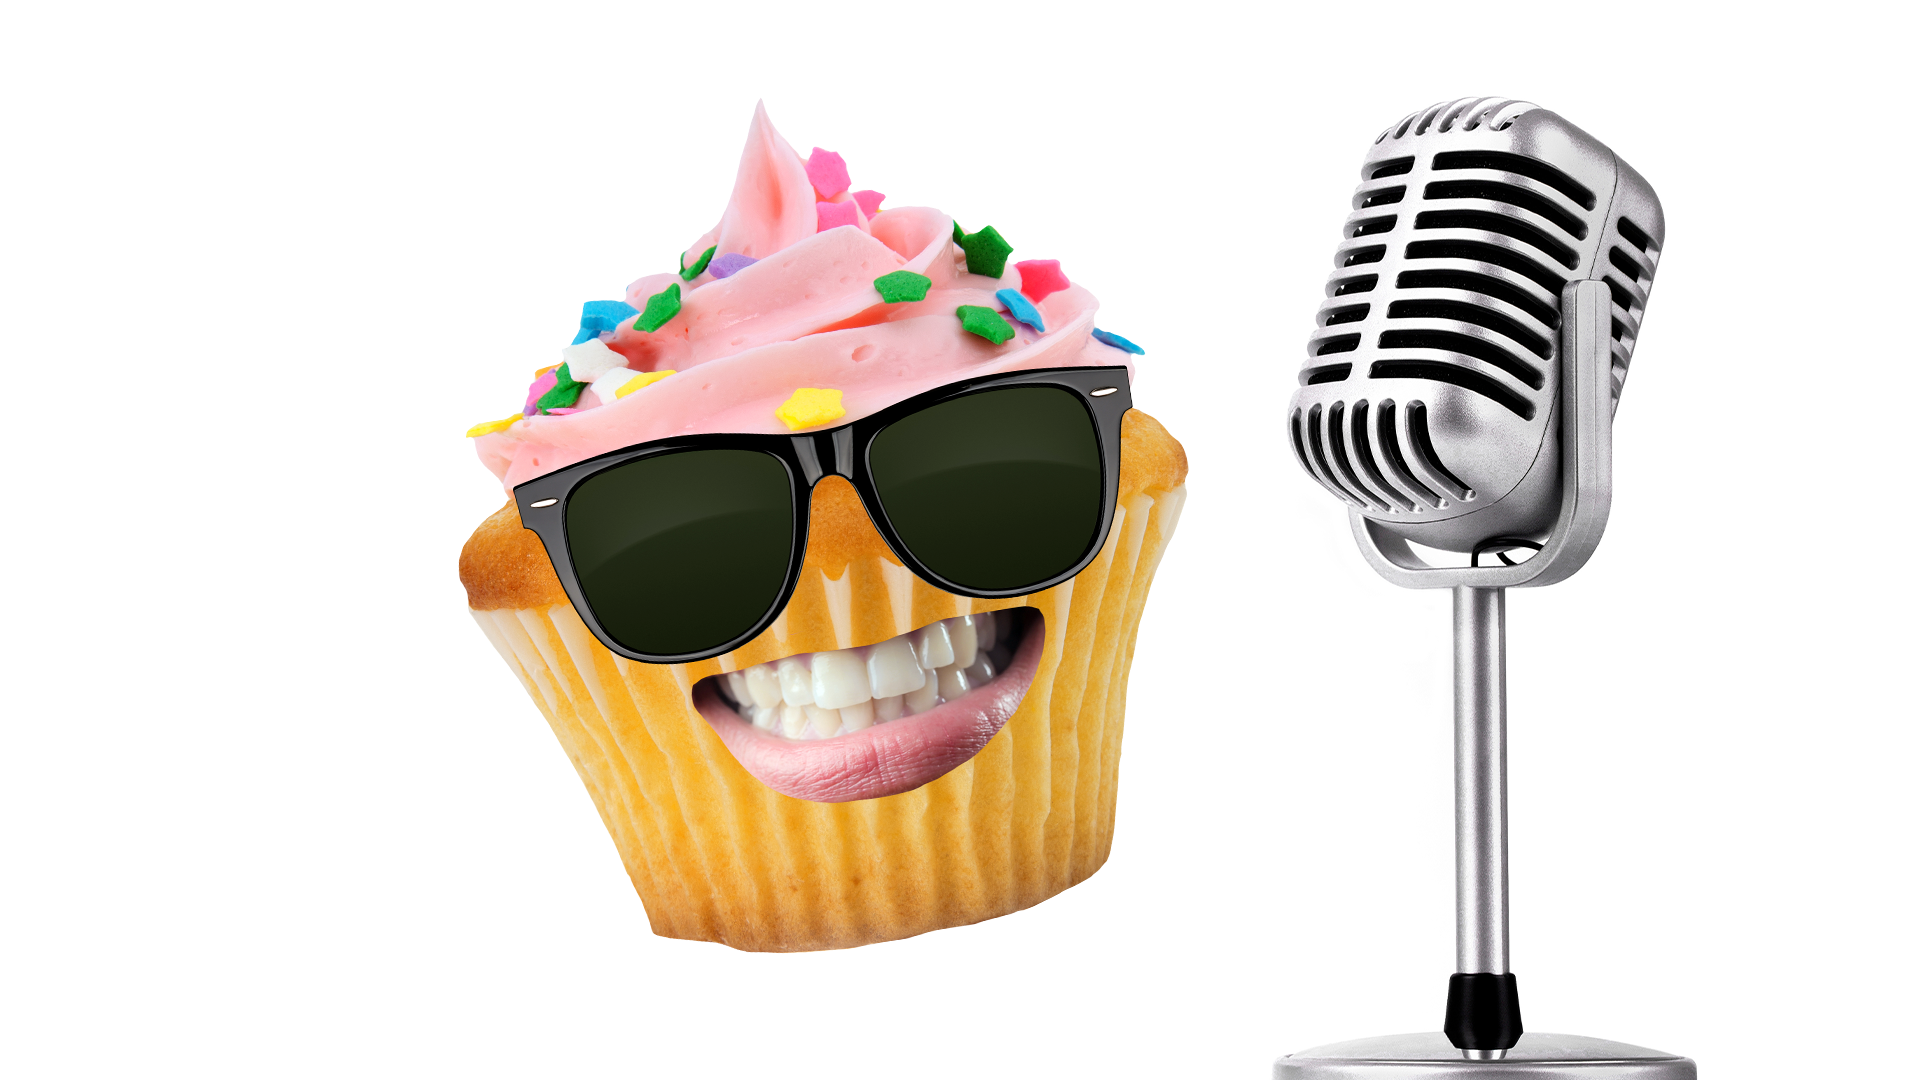 Cupcake with mic